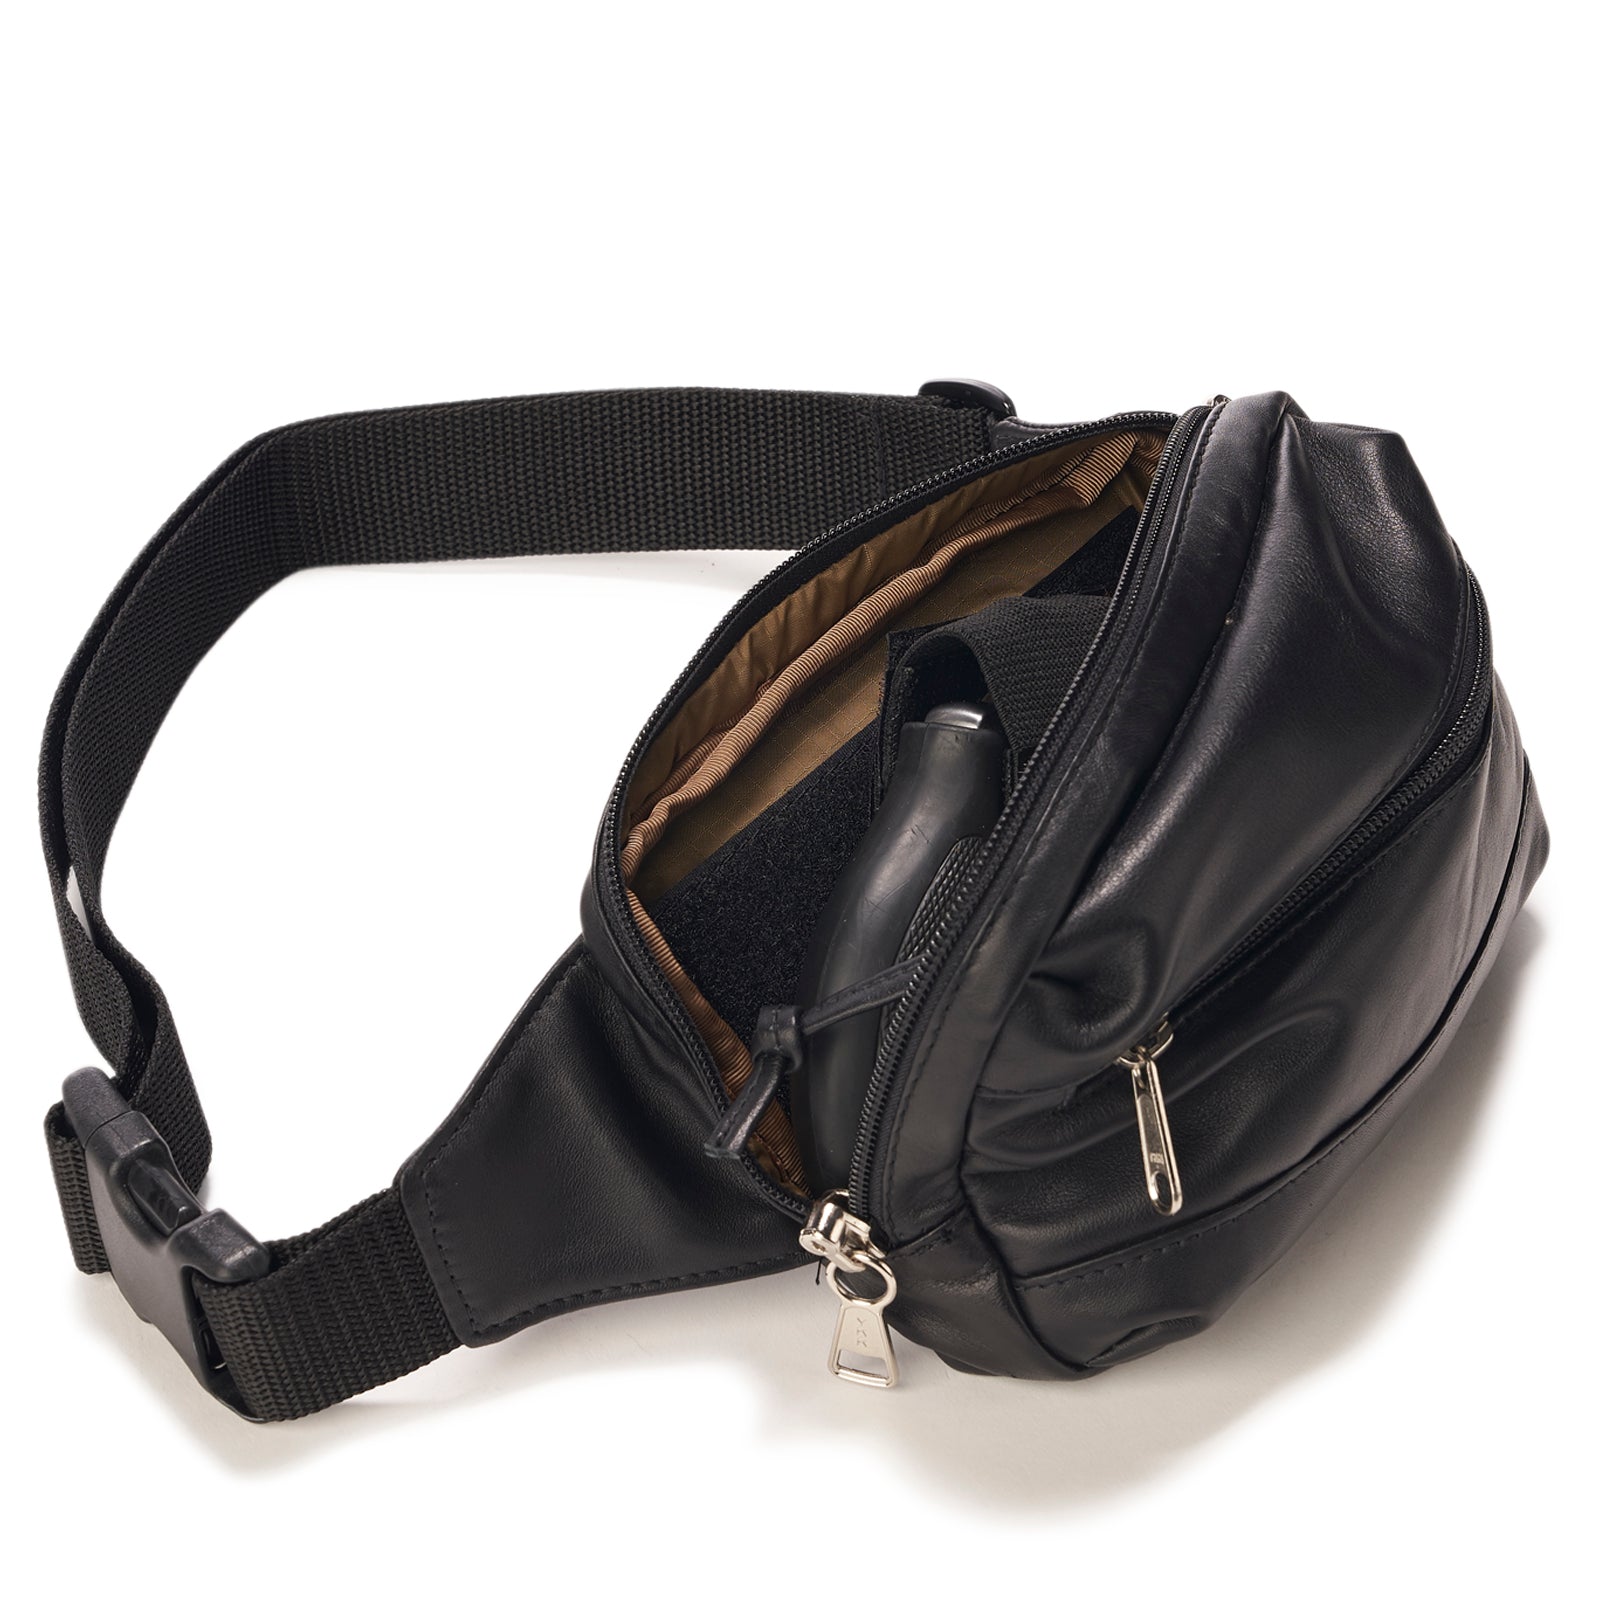 Stealth Pac-2 — Coronado Leather